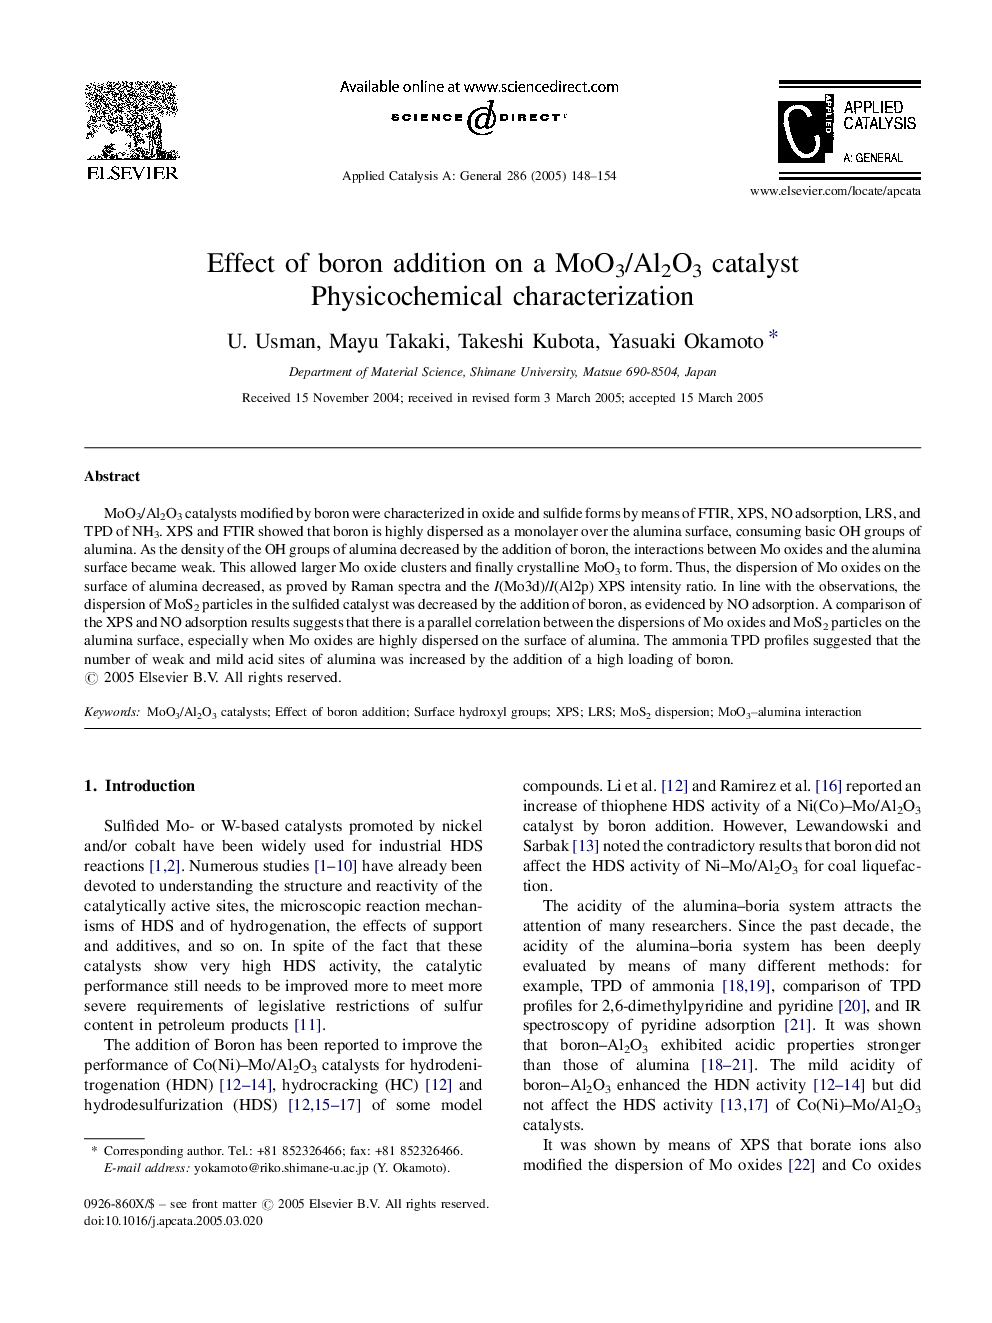 Effect of boron addition on a MoO3/Al2O3 catalyst